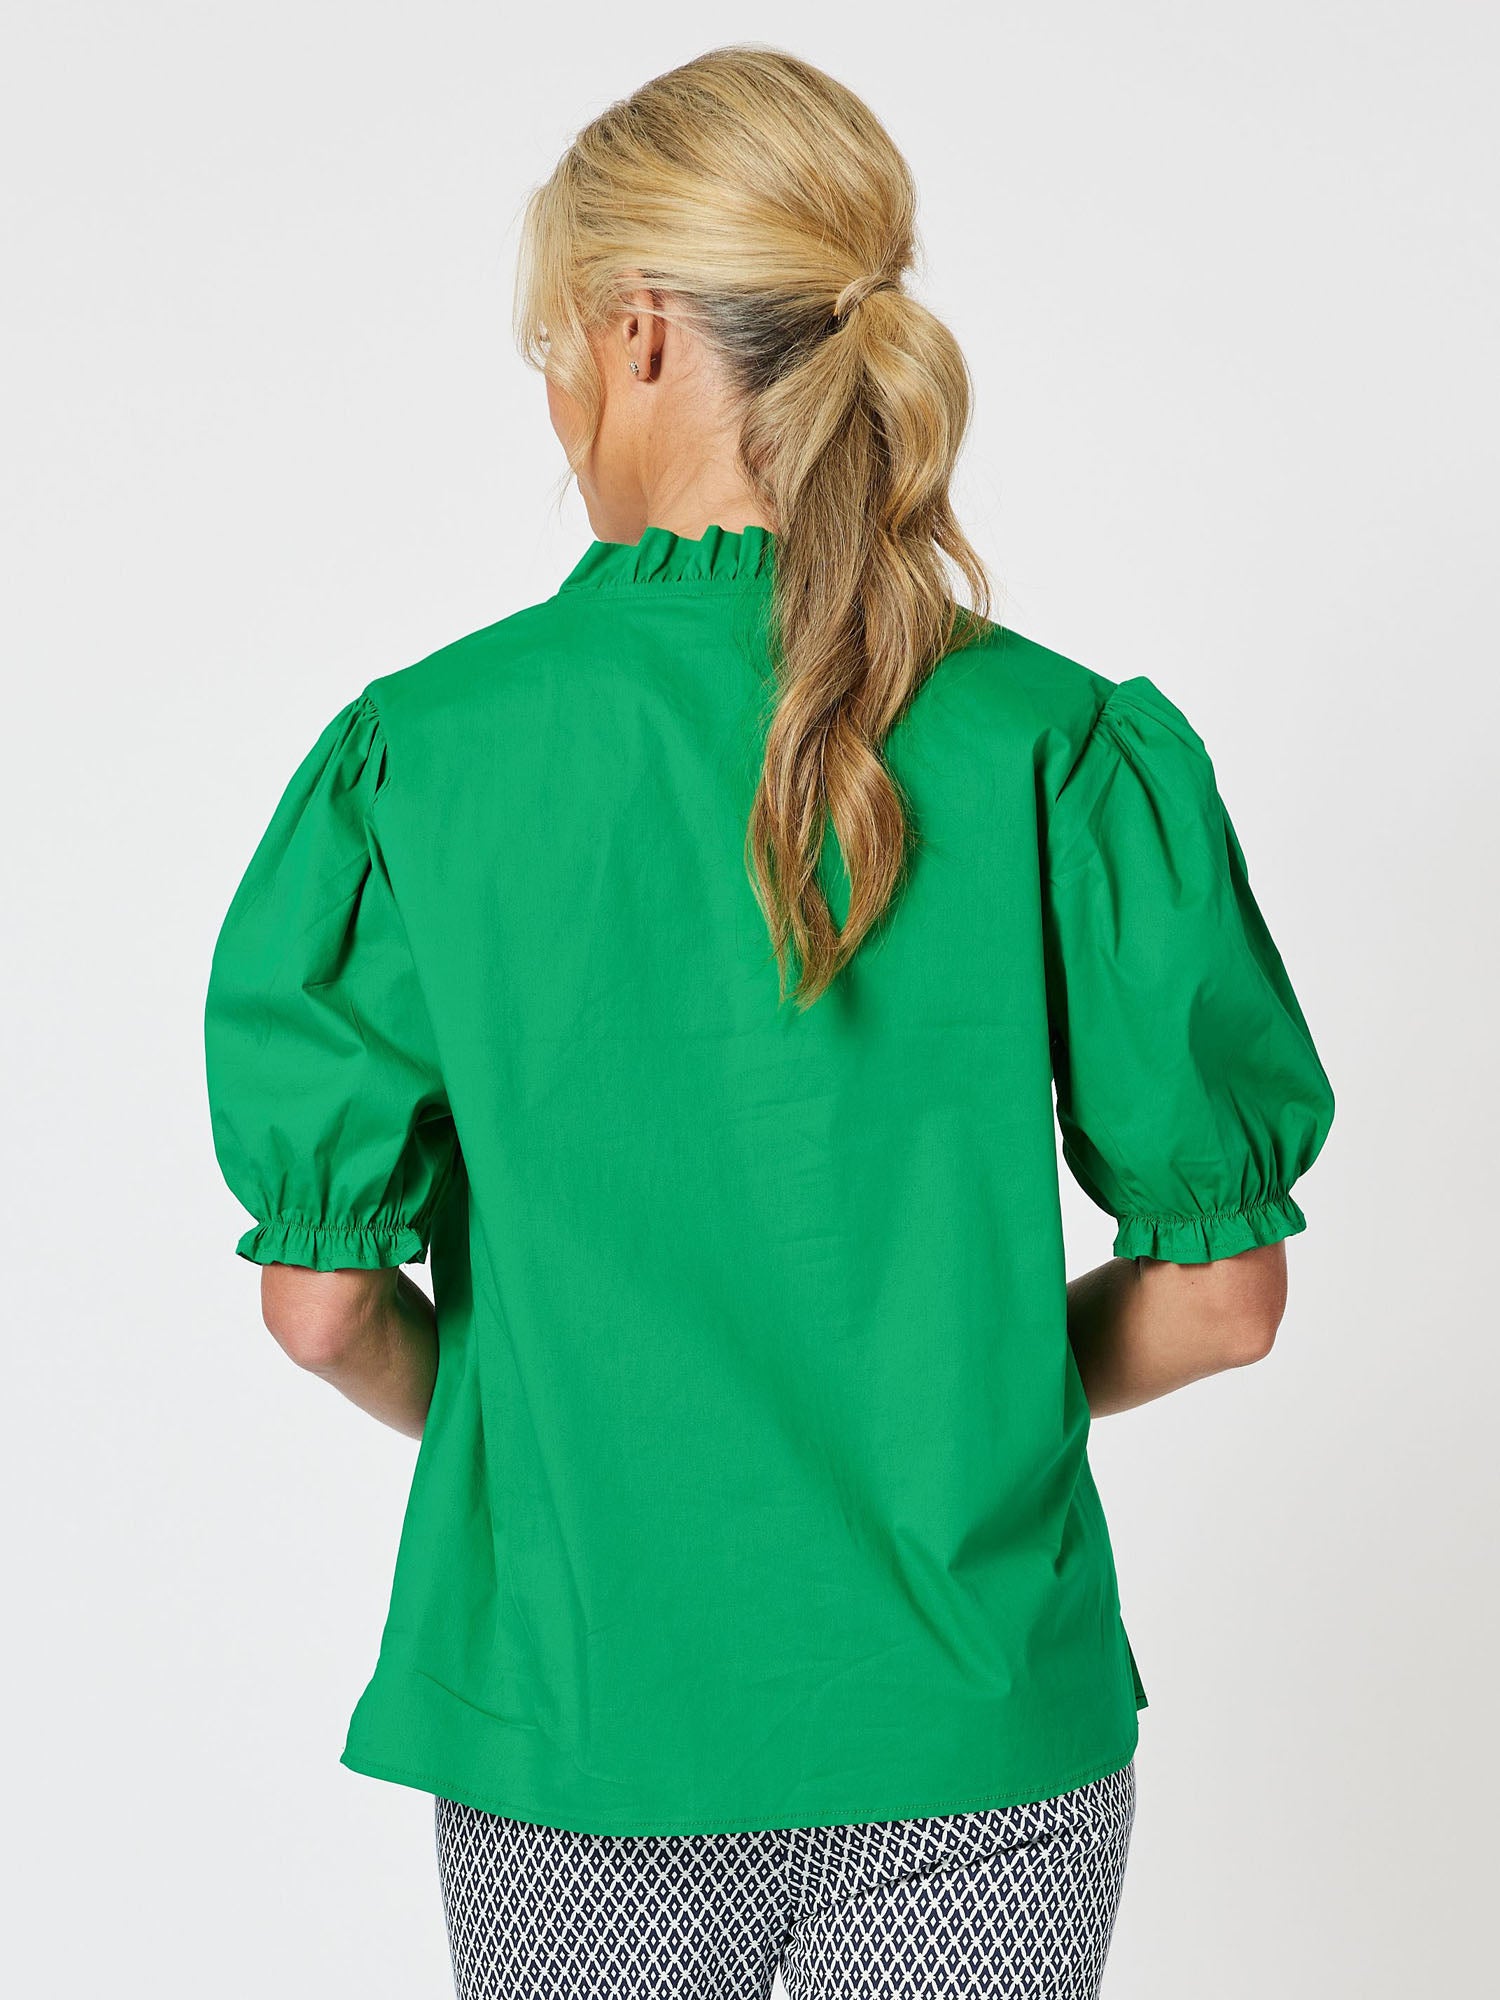 Balmoral Stretch Cotton Short Sleeve Top - Emerald